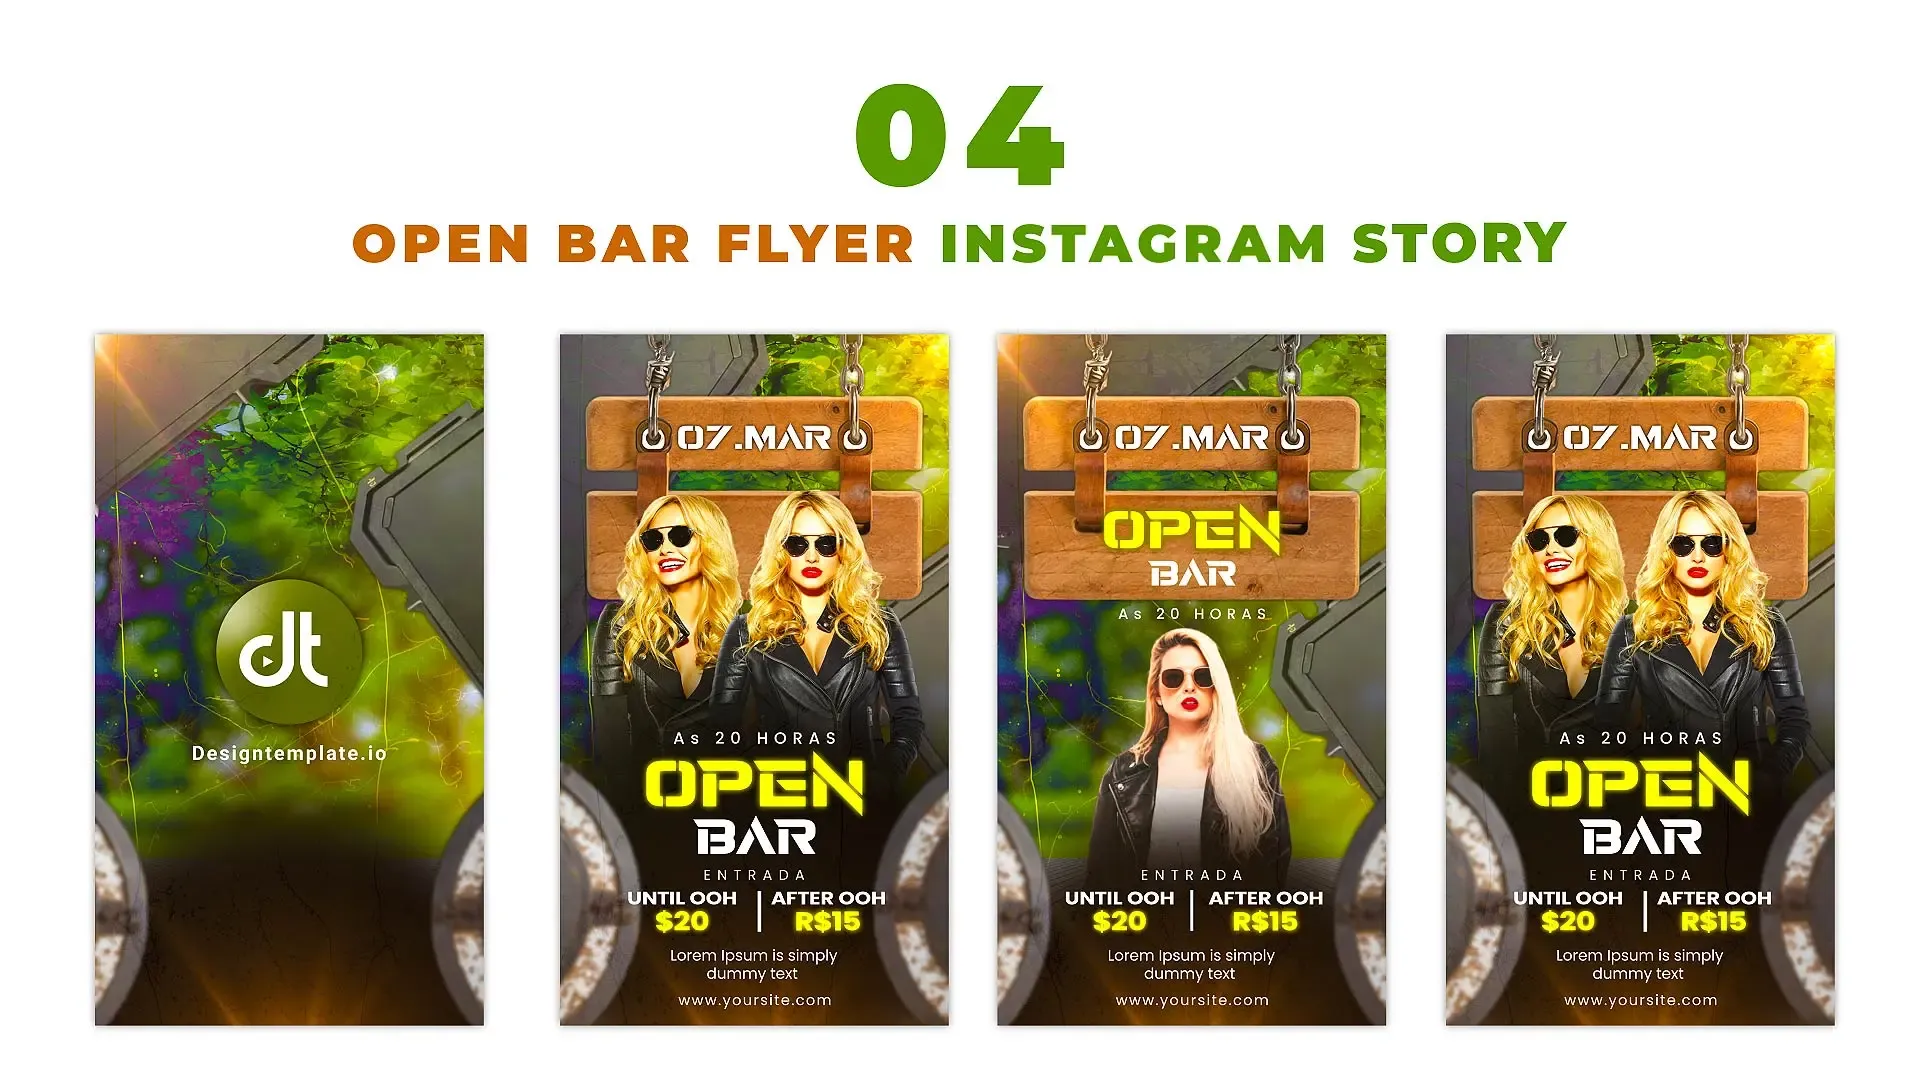 Open Bar Flyer Instagram Story